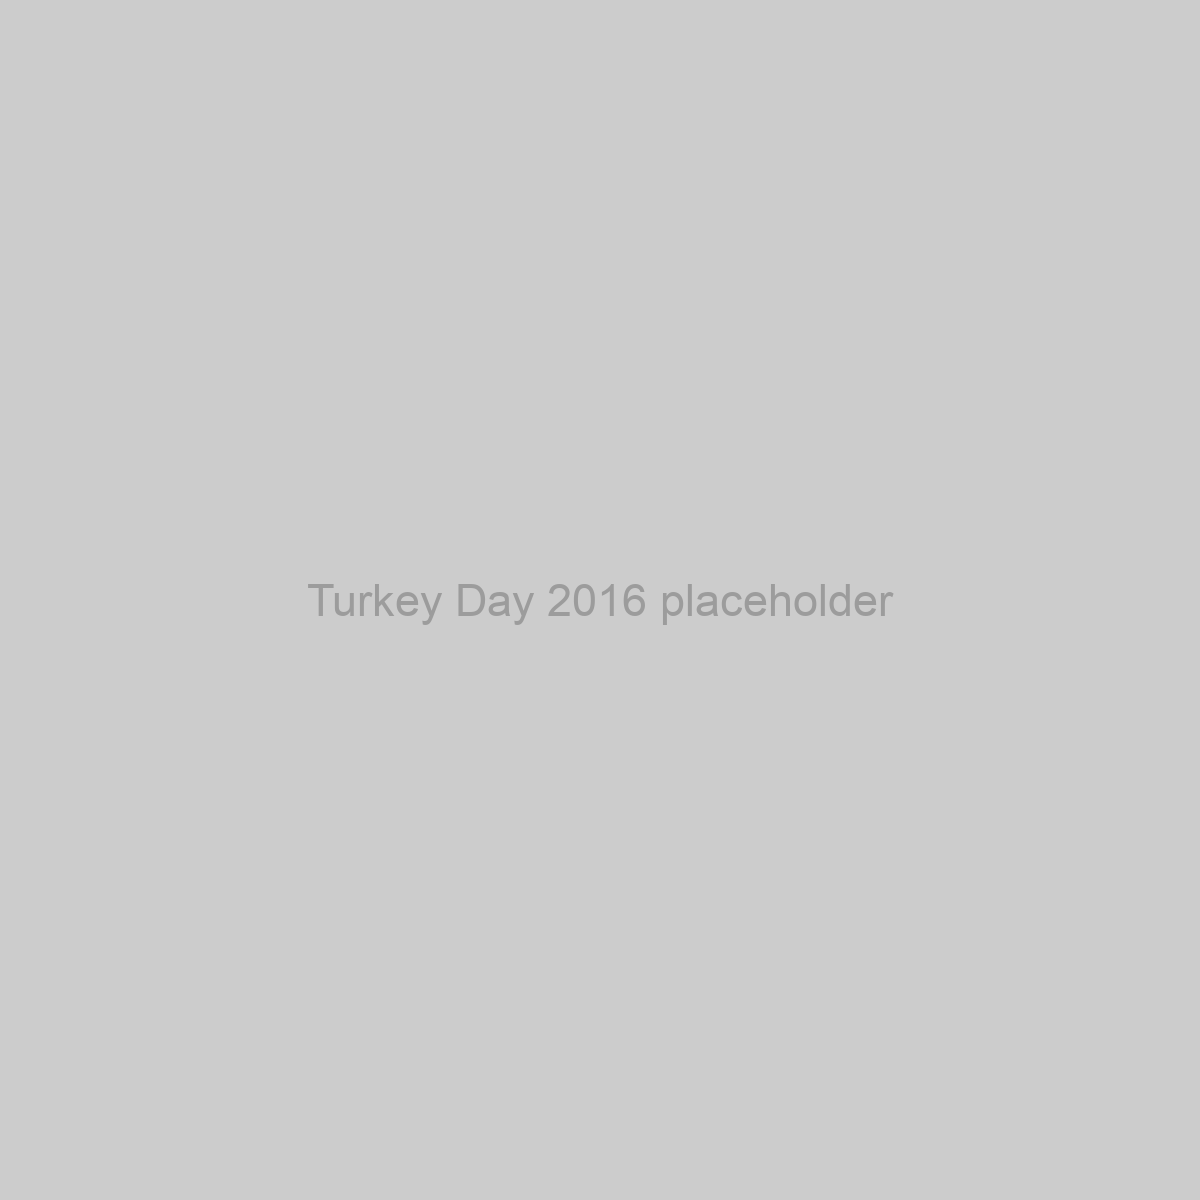 Turkey Day 2016 Placeholder Image